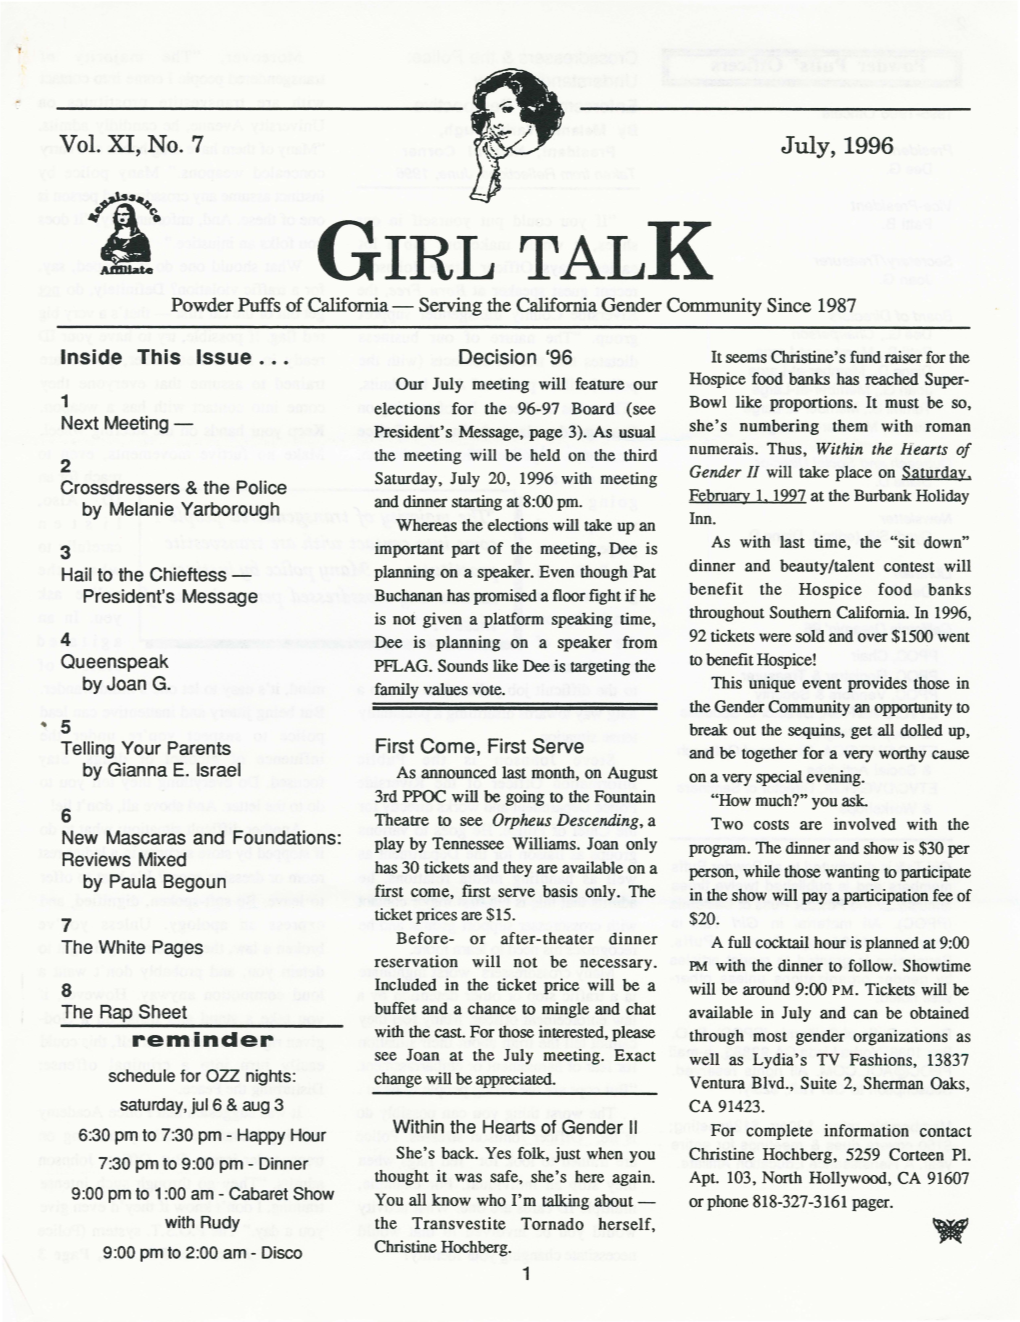 GIRL TALK Powder Puffs of California - Serving the California Gender Community Since 1987